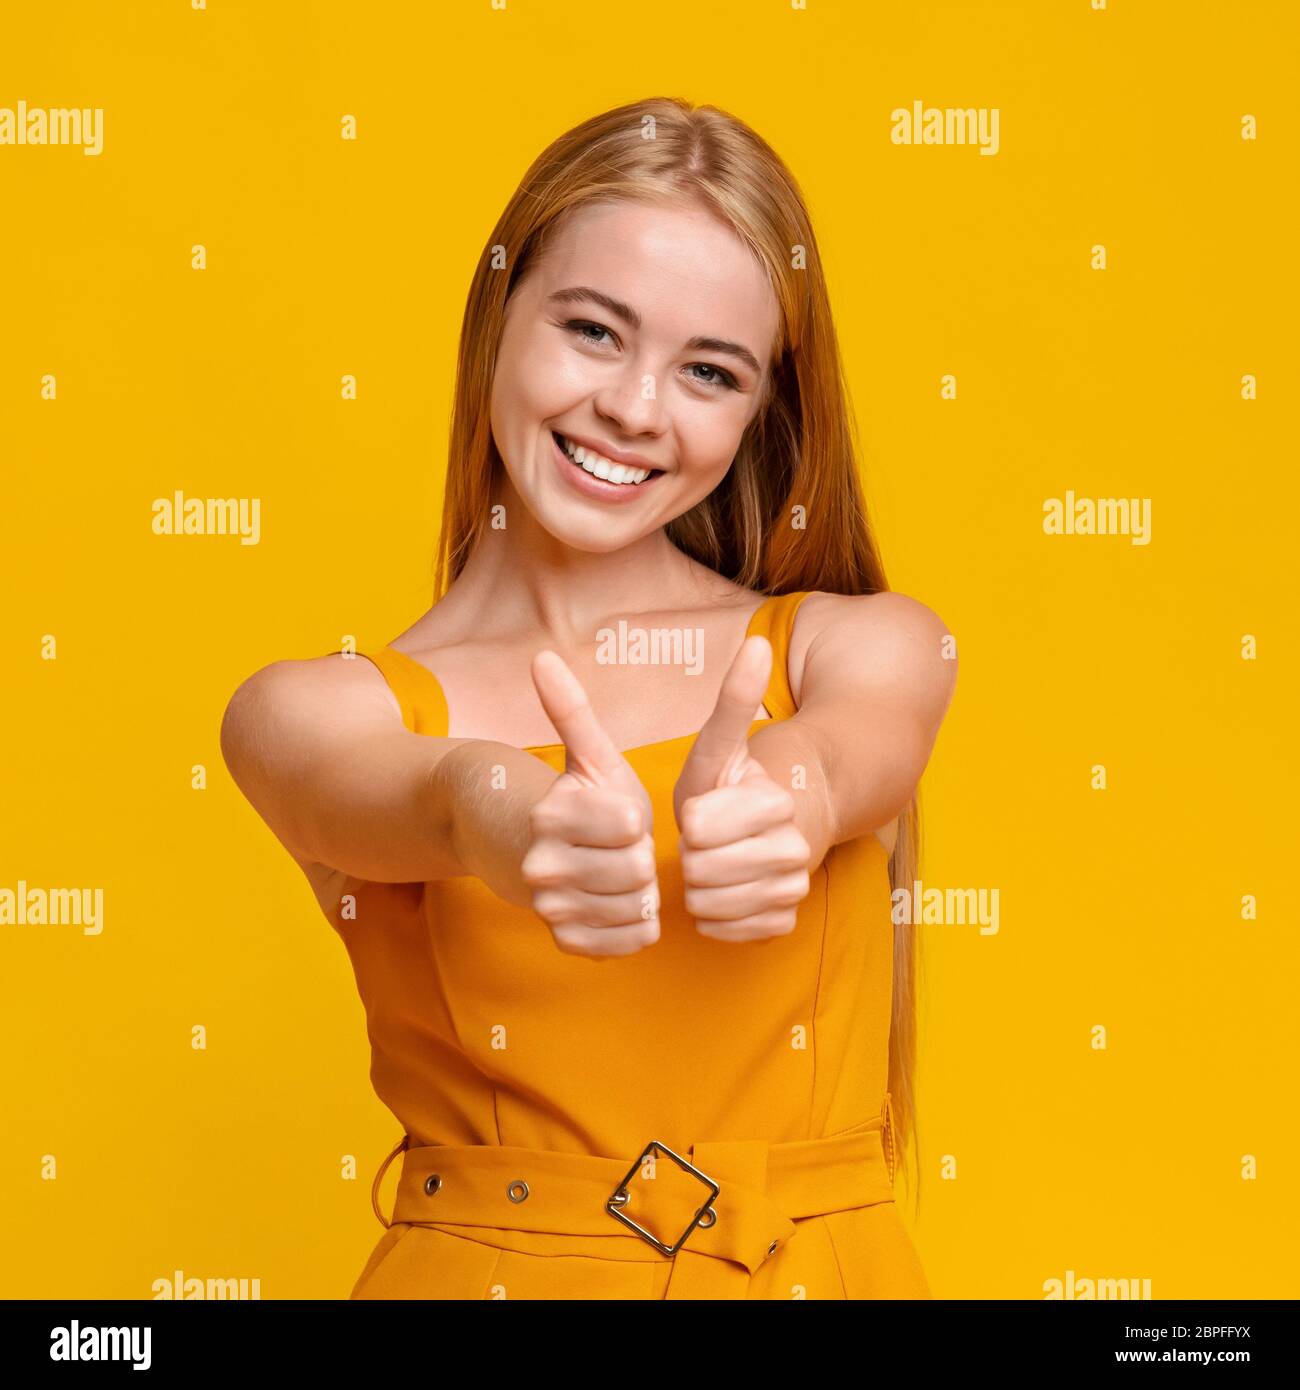 Gioiosa ragazza teen gesturing Thumbs Up a Camera su sfondo giallo Foto Stock